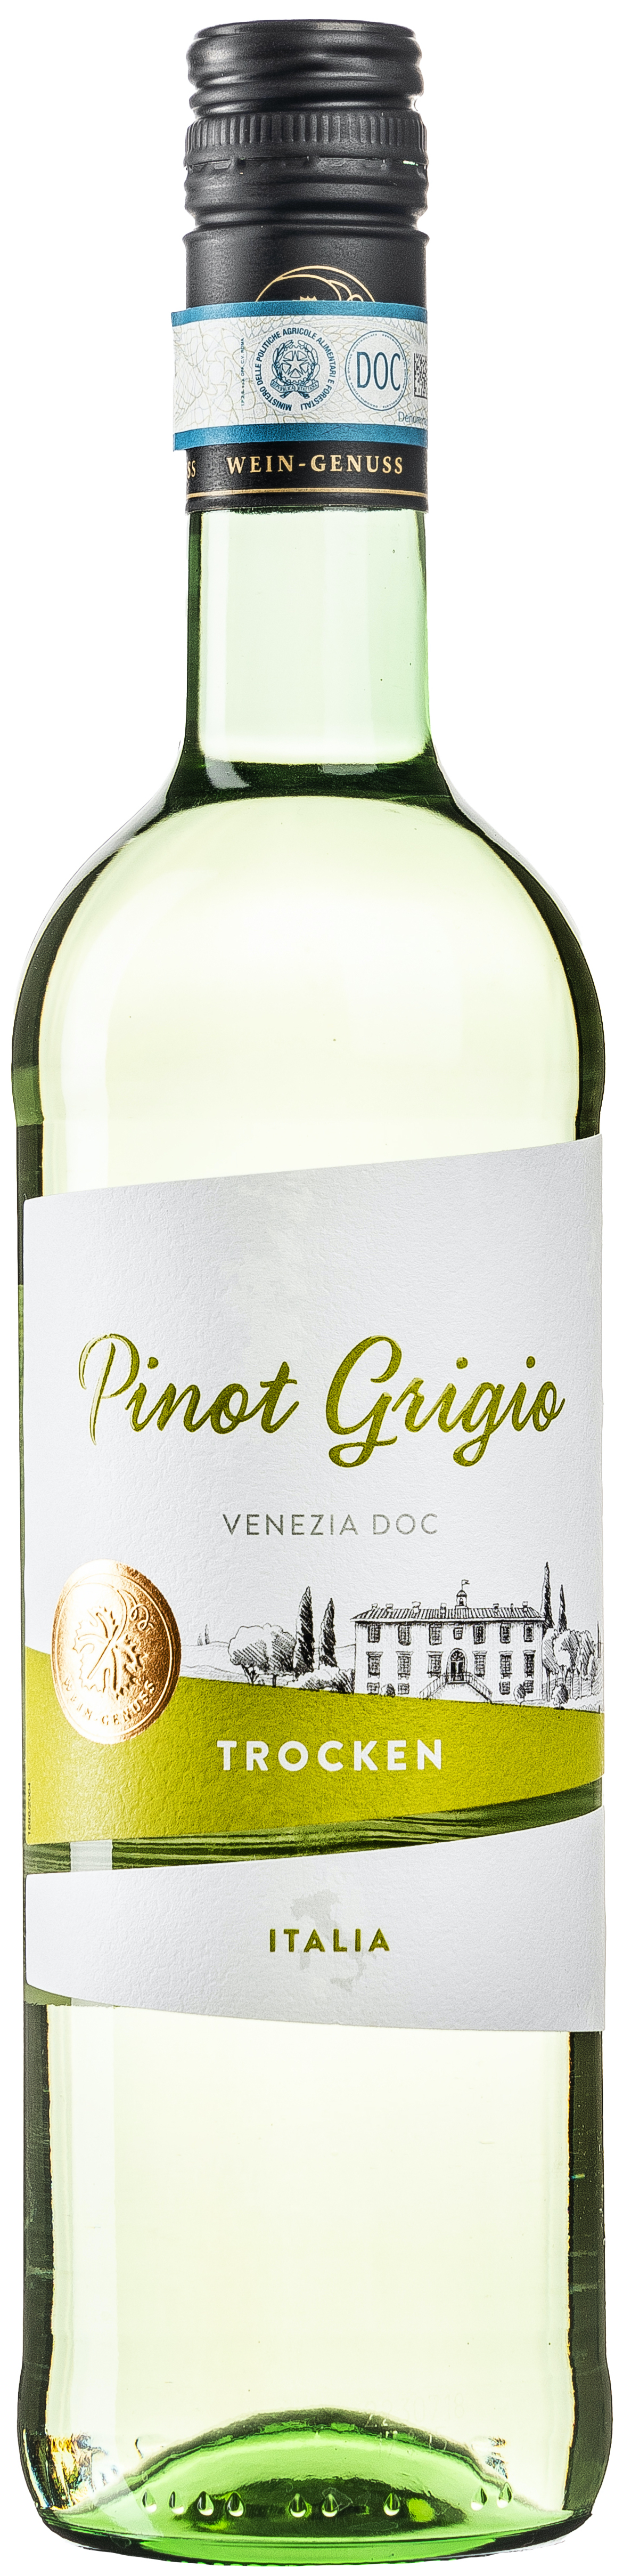 Wein-Genuss Pinot Grigio Venezia trocken 12%vol. 0,75L